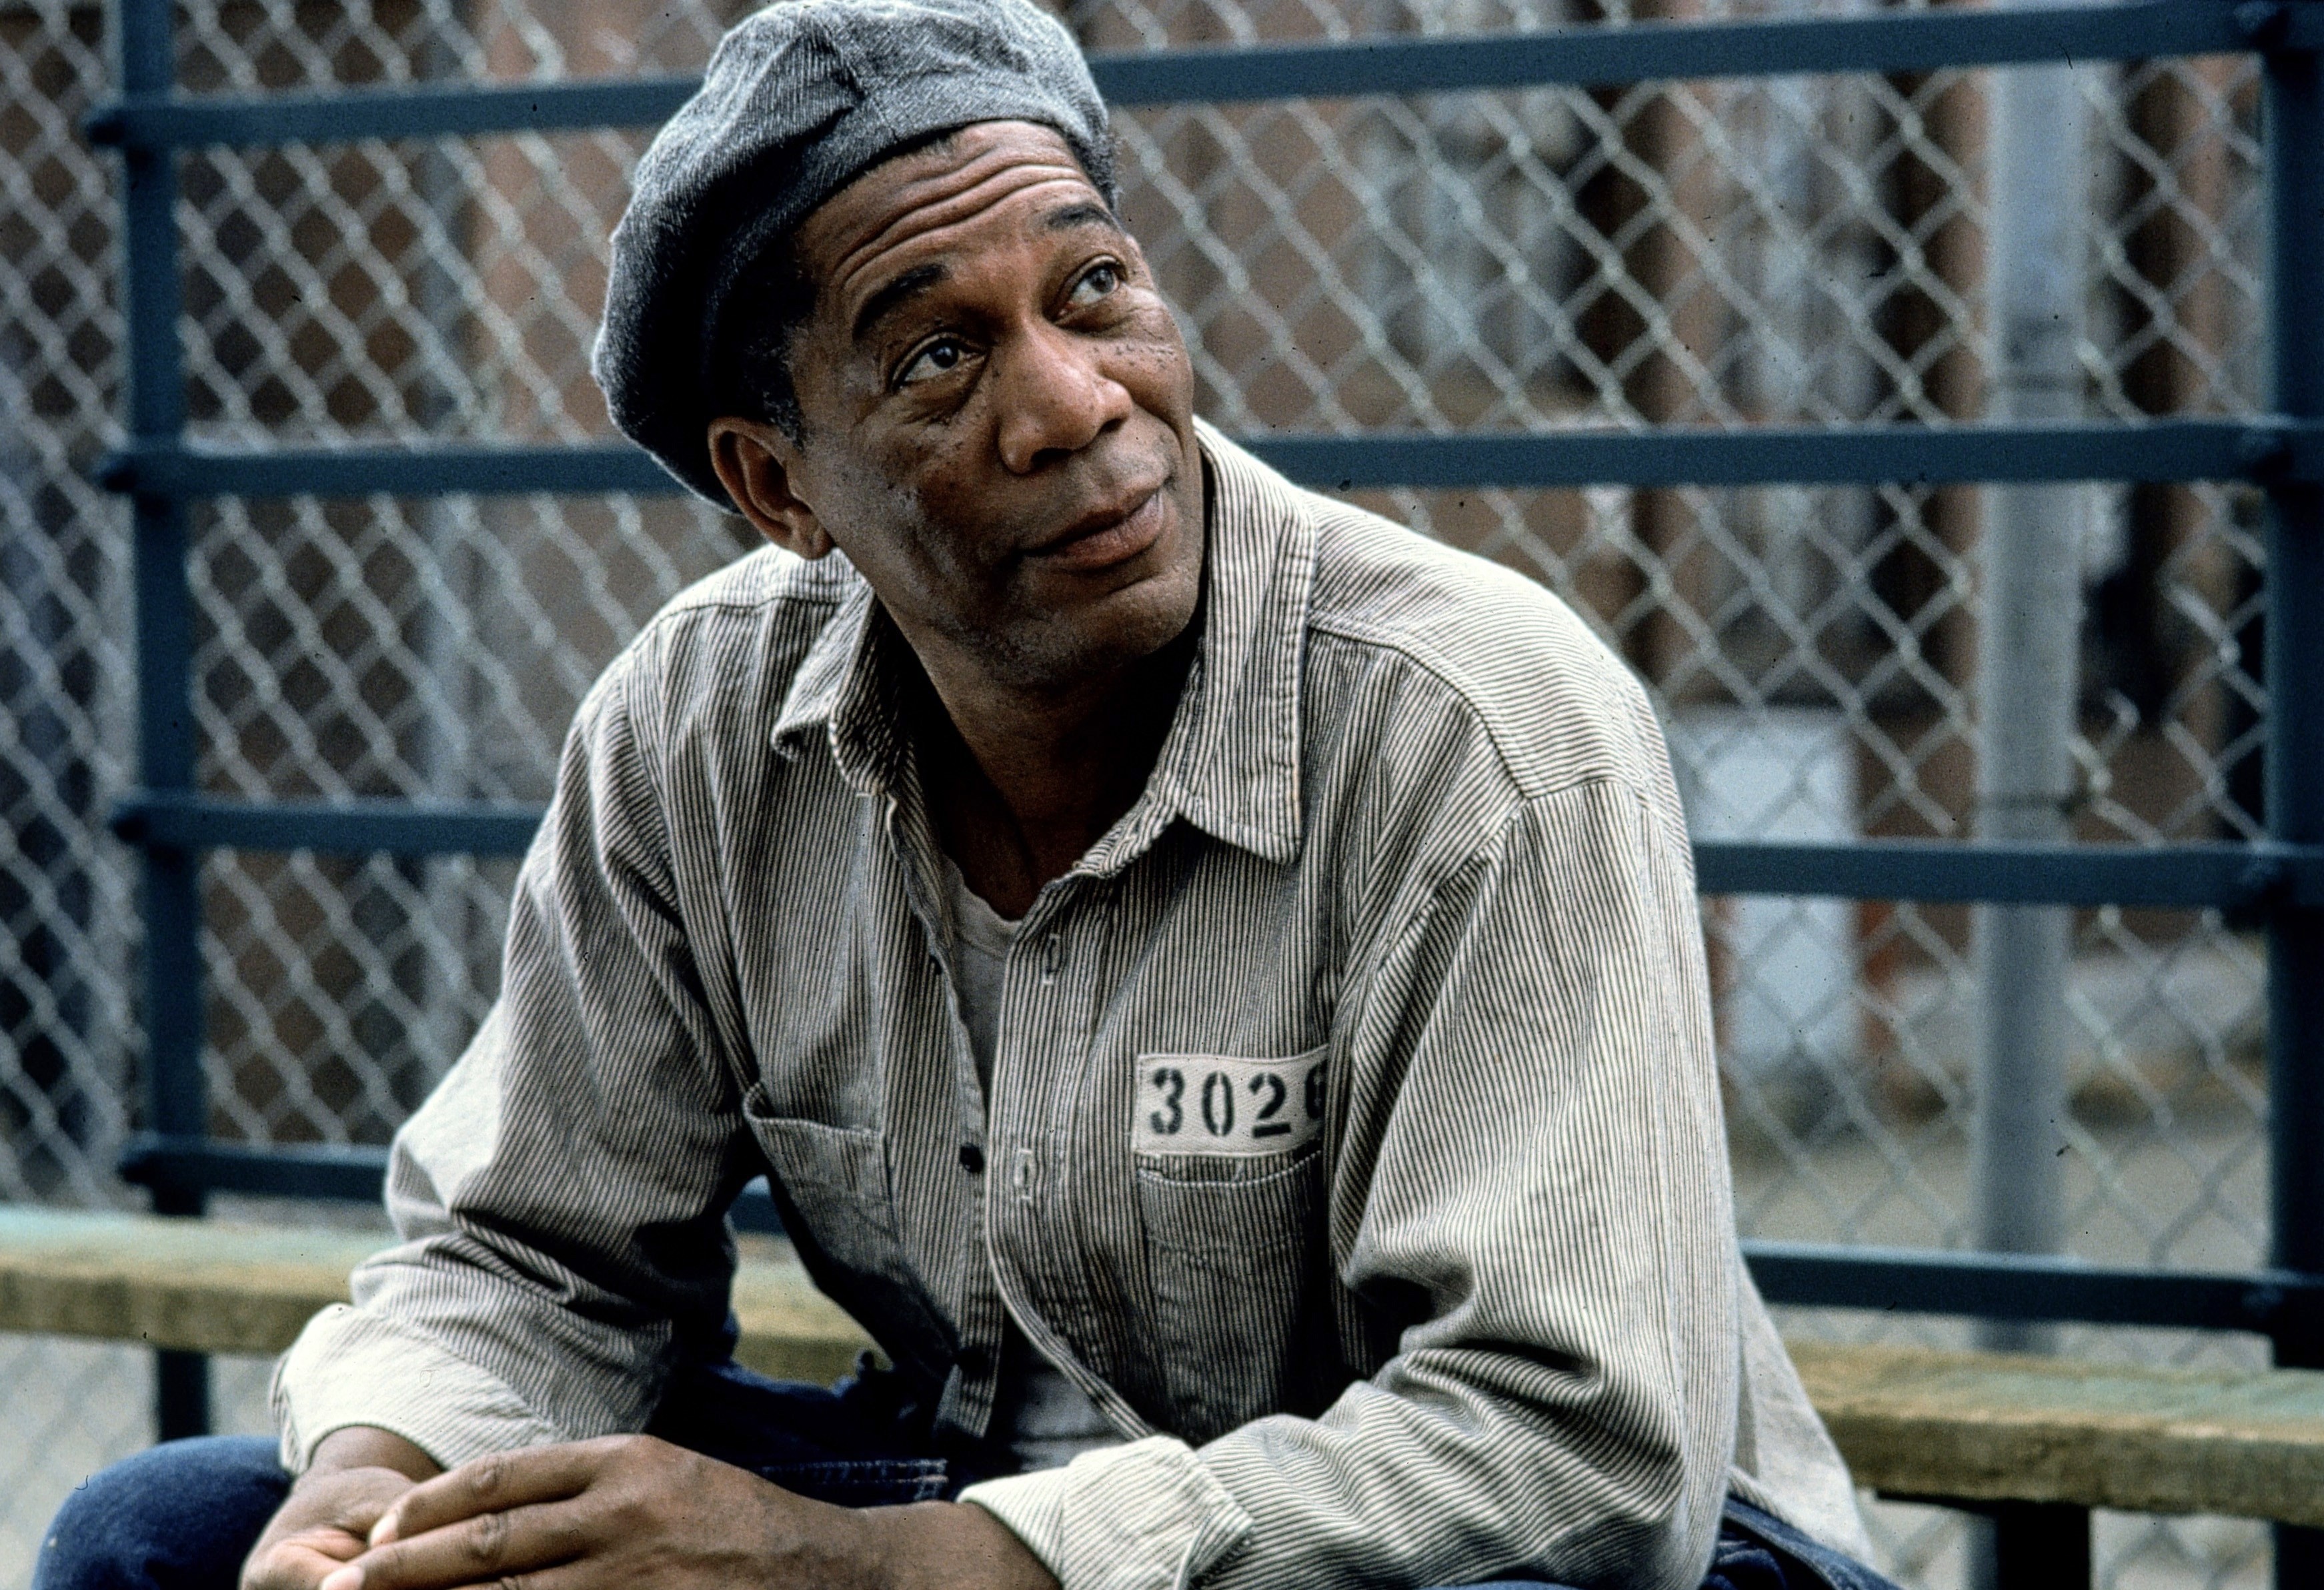 People 3485x2384 The Shawshank Redemption Morgan Freeman 1994 (Year) numbers movies actor men film stills